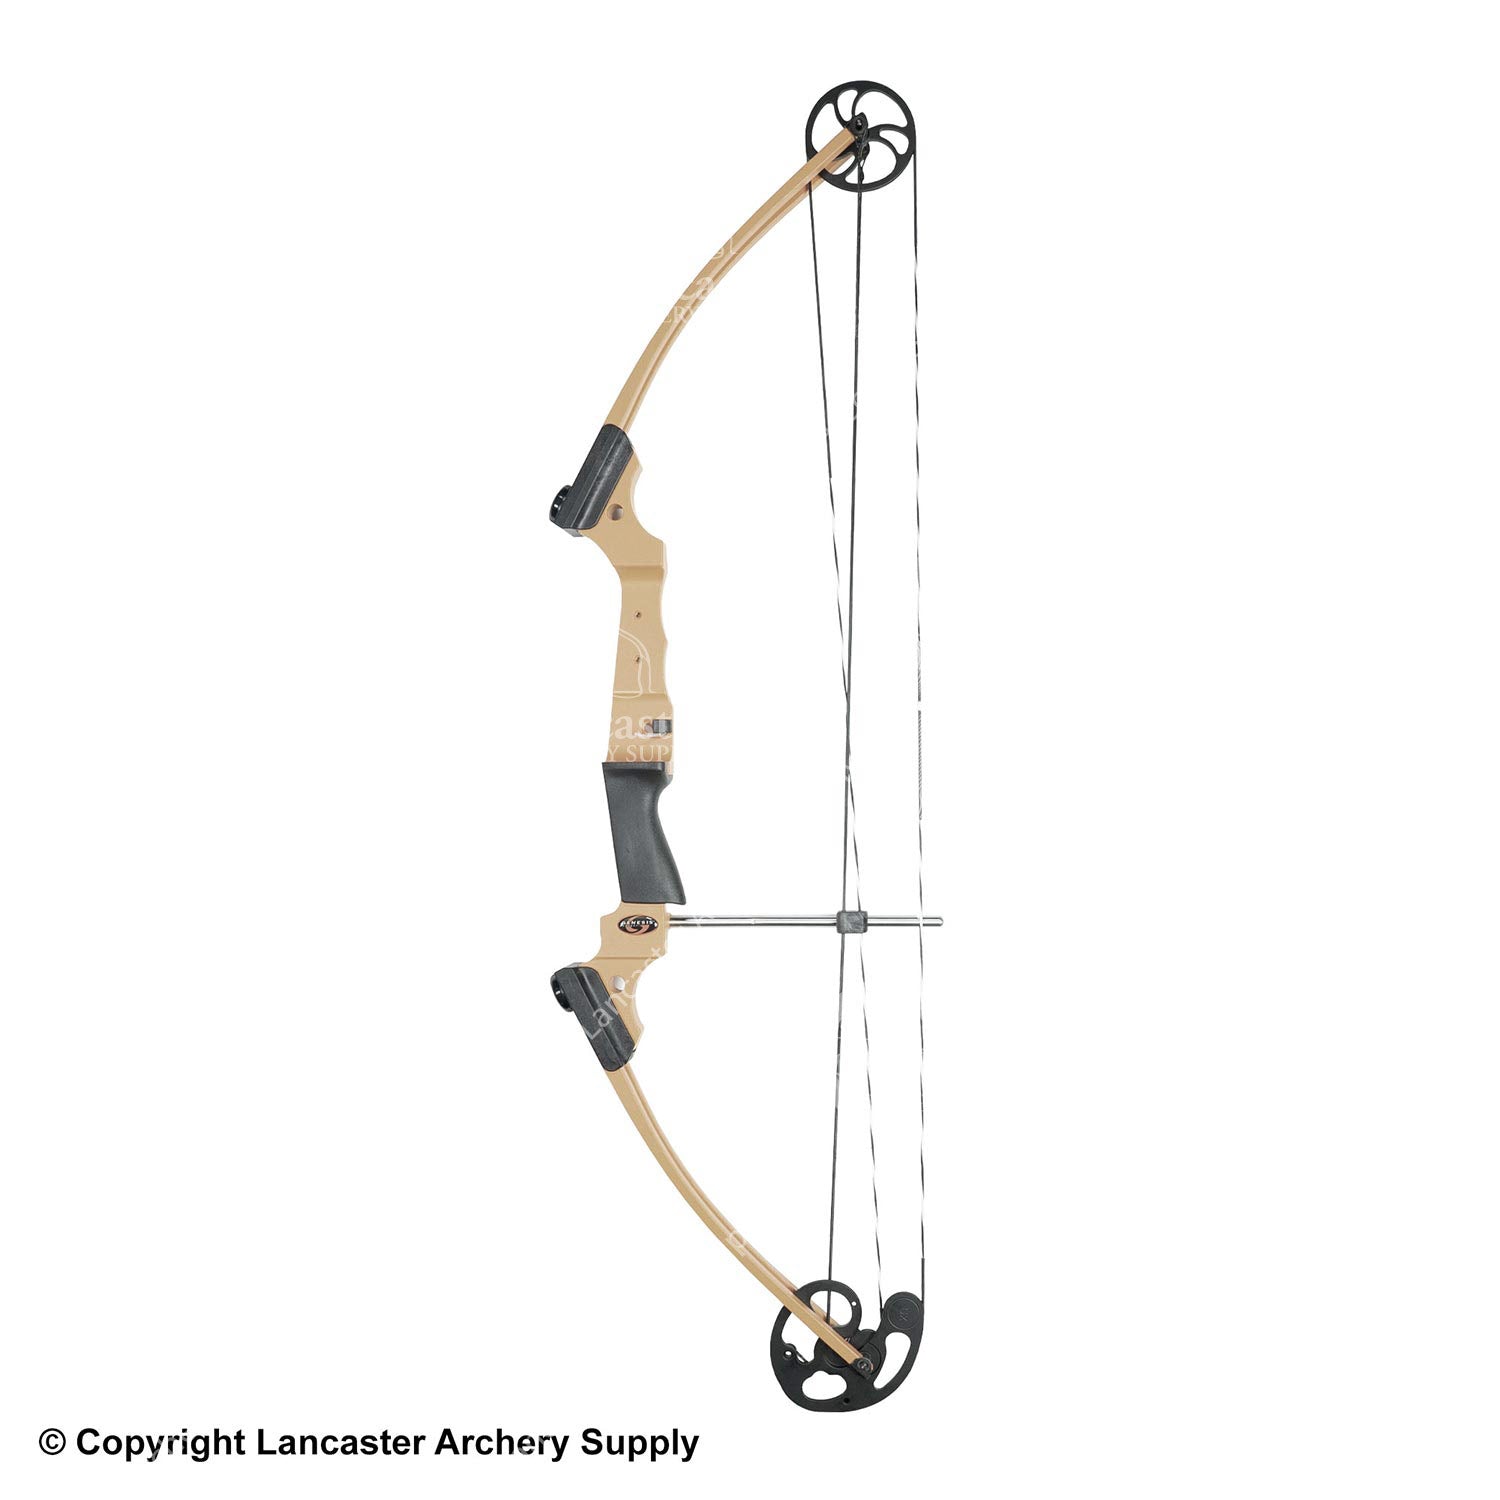 Genesis Archery Original Genesis Bow (Colors)